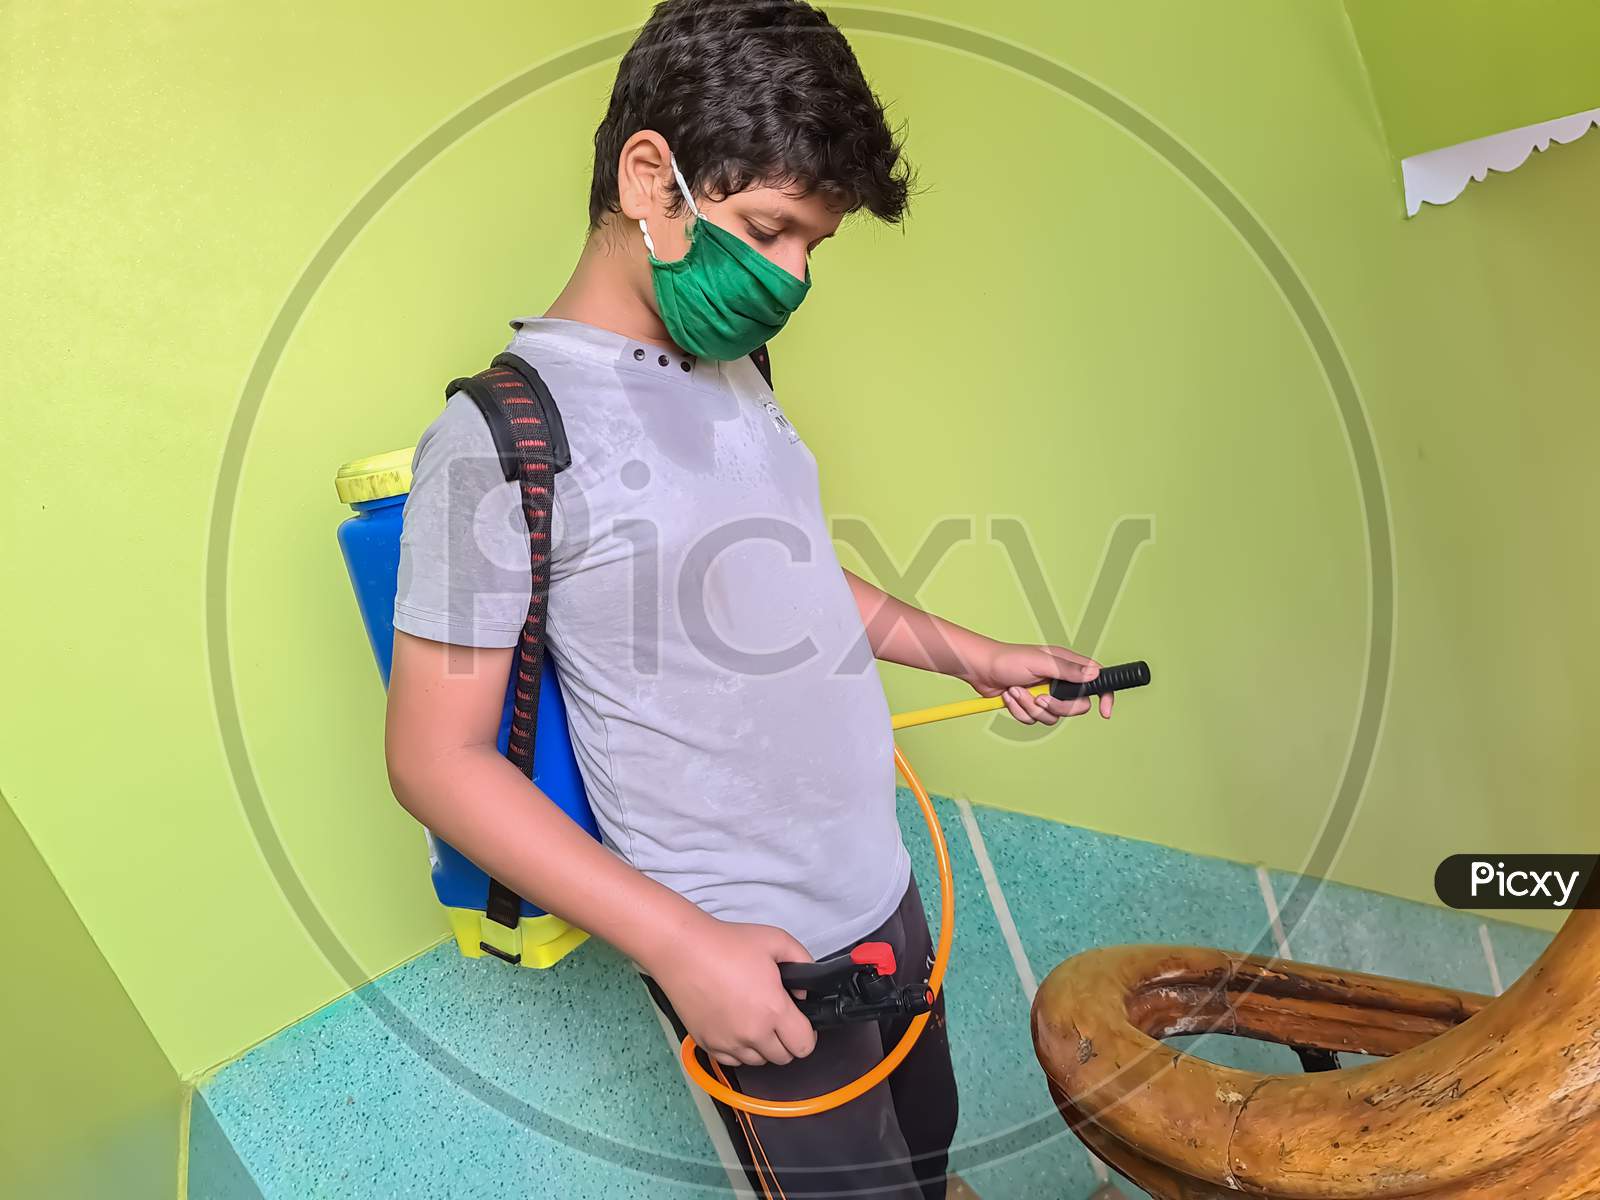 A boy with sanitizer